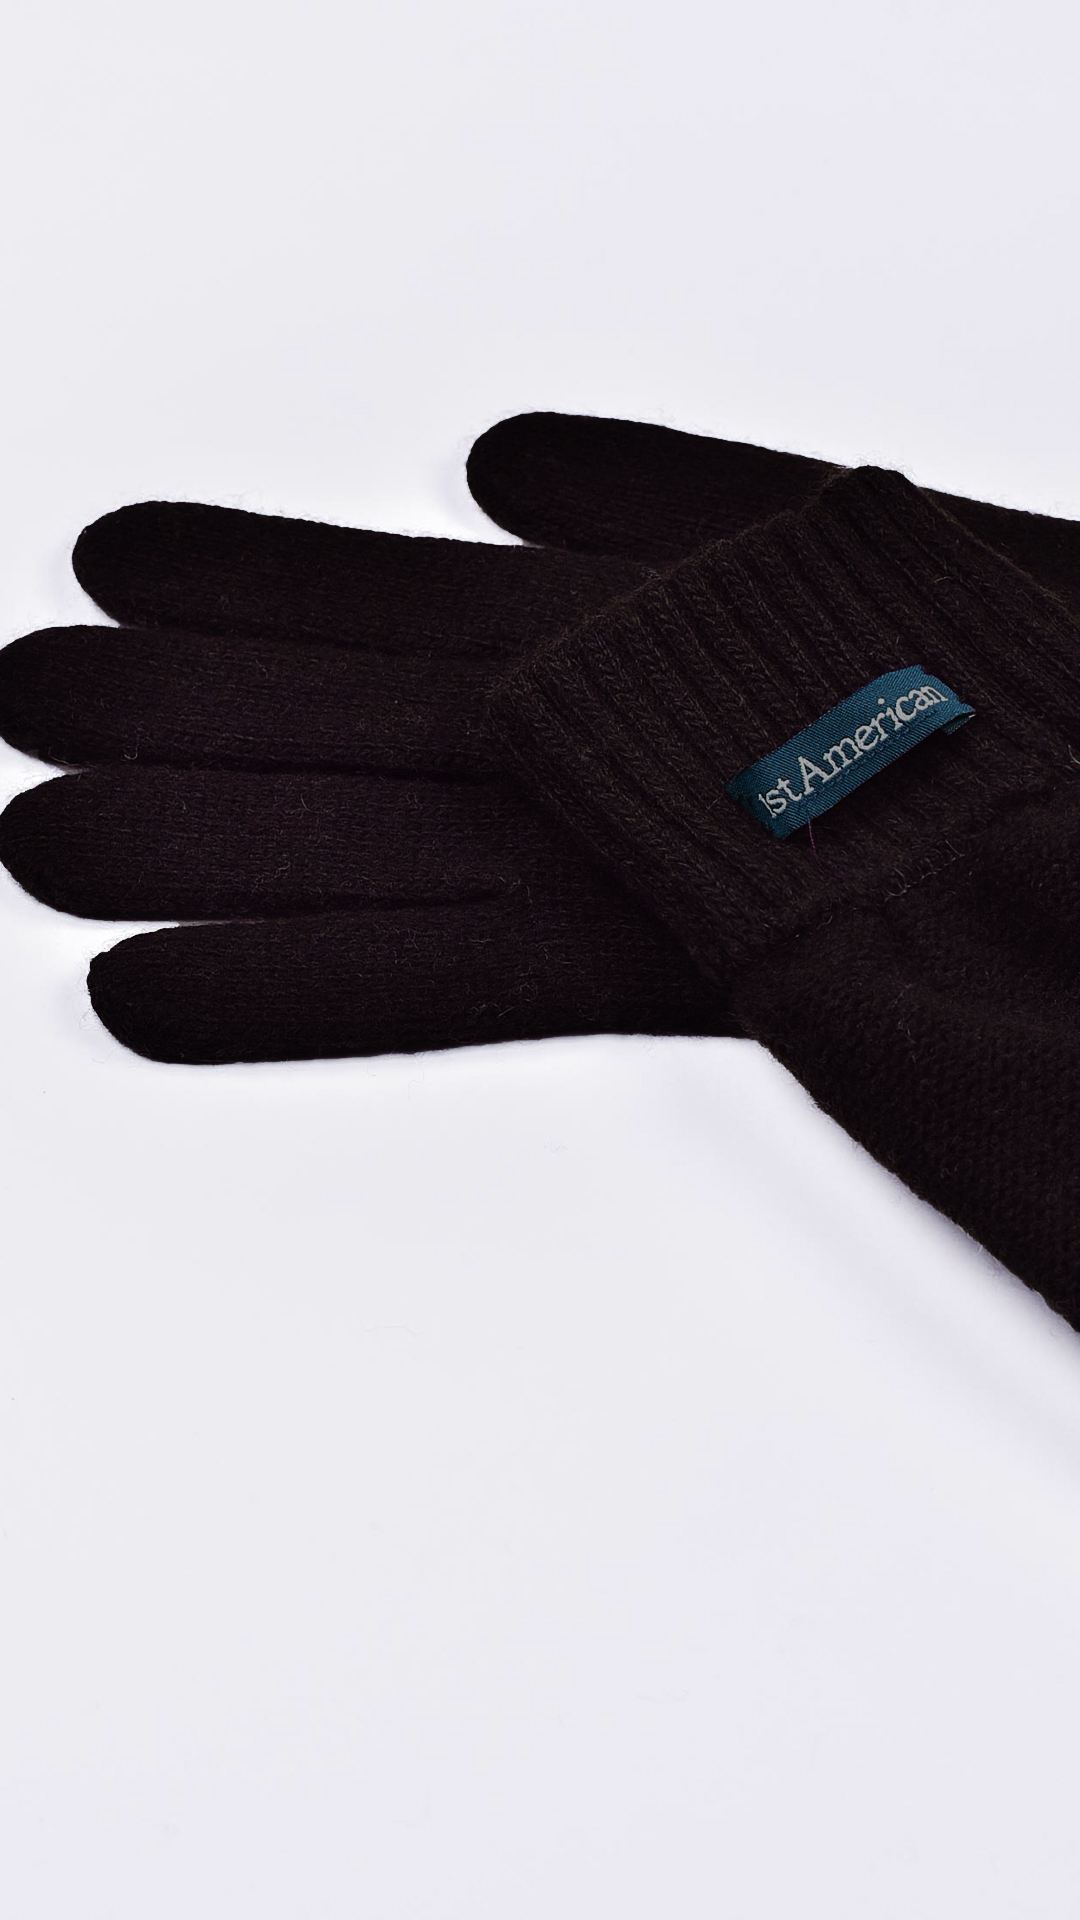 Glovesmixdario moro 3 1stAmerican guanti in lana e cashmere da uomo Made in Italy - caldi guanti invernali